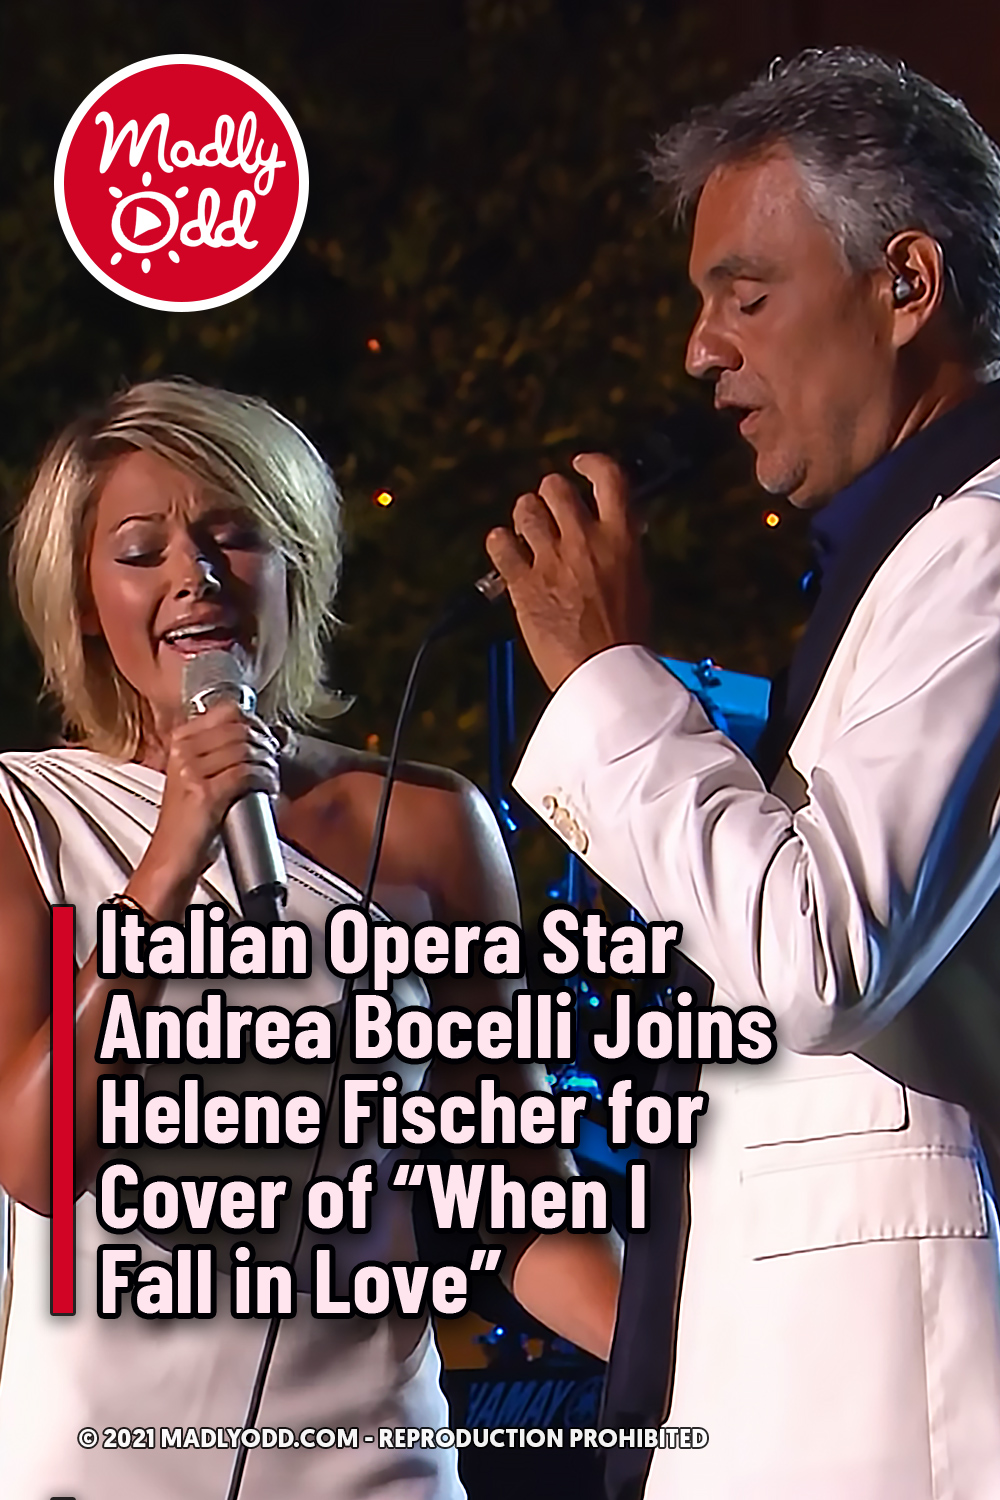 Italian Opera Star Andrea Bocelli Joins Helene Fischer for Cover of “When I Fall in Love”